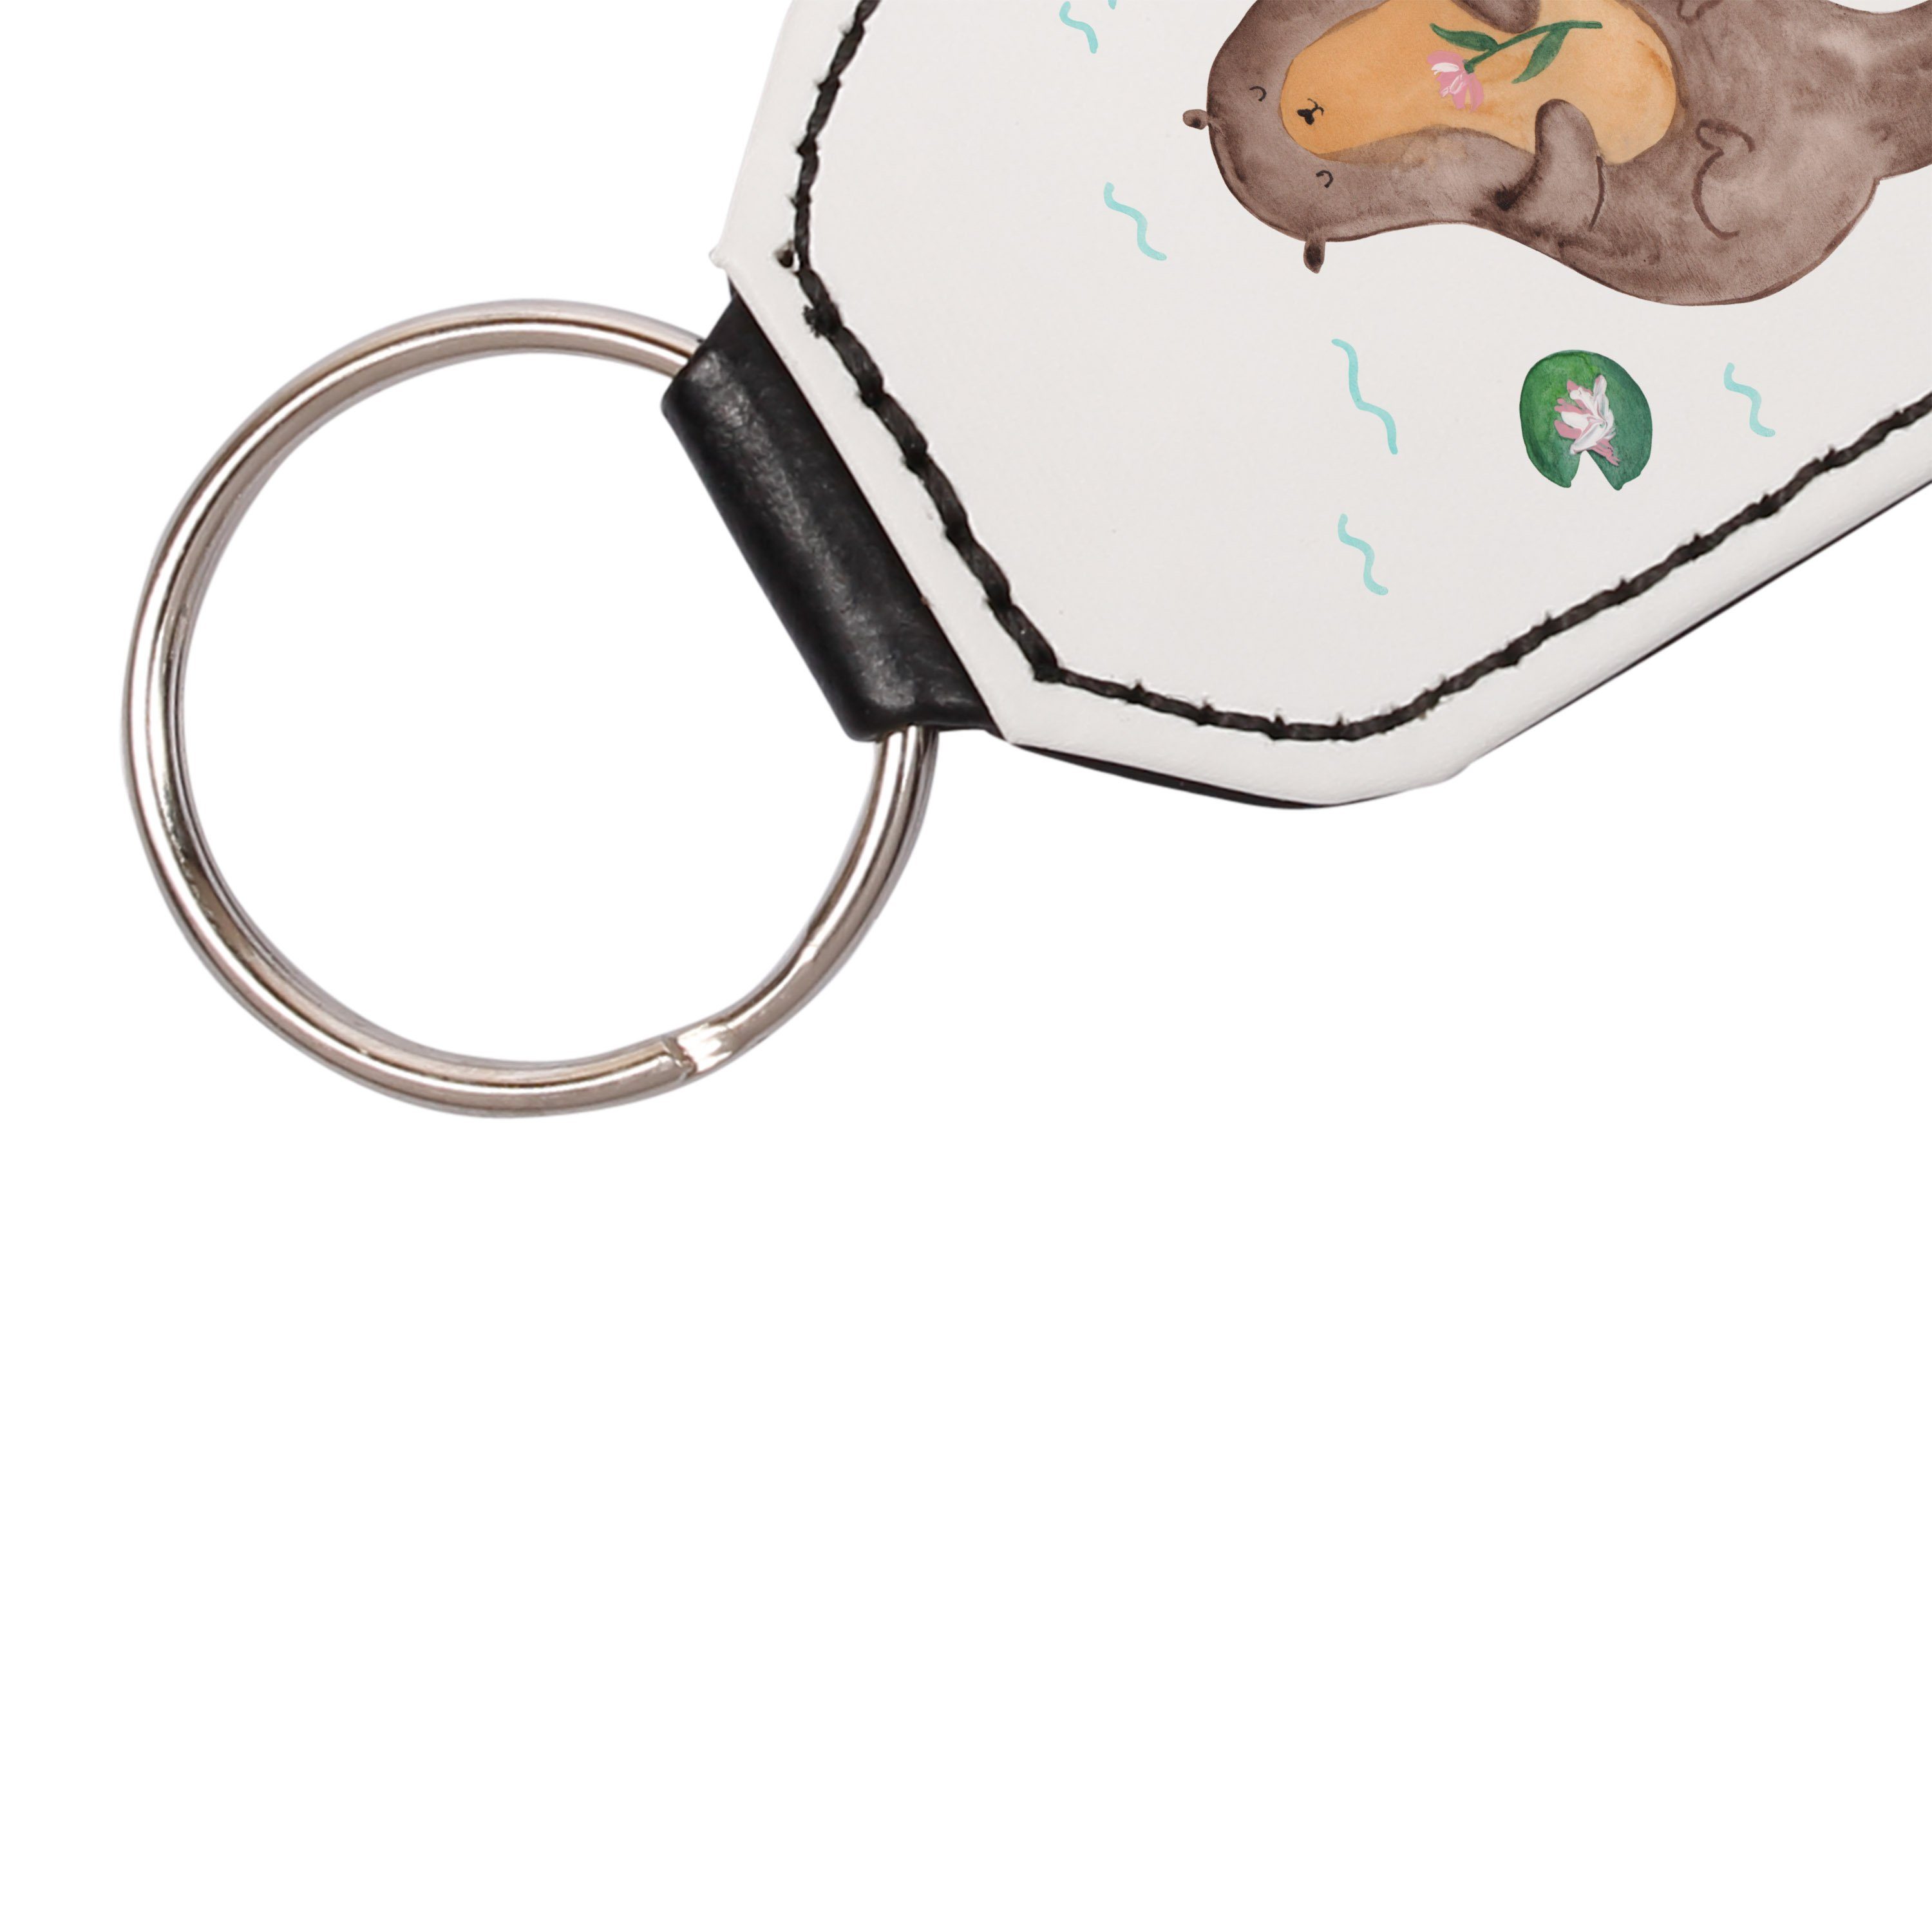 Mr. & Mrs. Panda Schlüsselanhänger Seeotter Weiß Seerose (1-tlg) - mit Otter - Otter Wasser, Geschenk, Seeotter